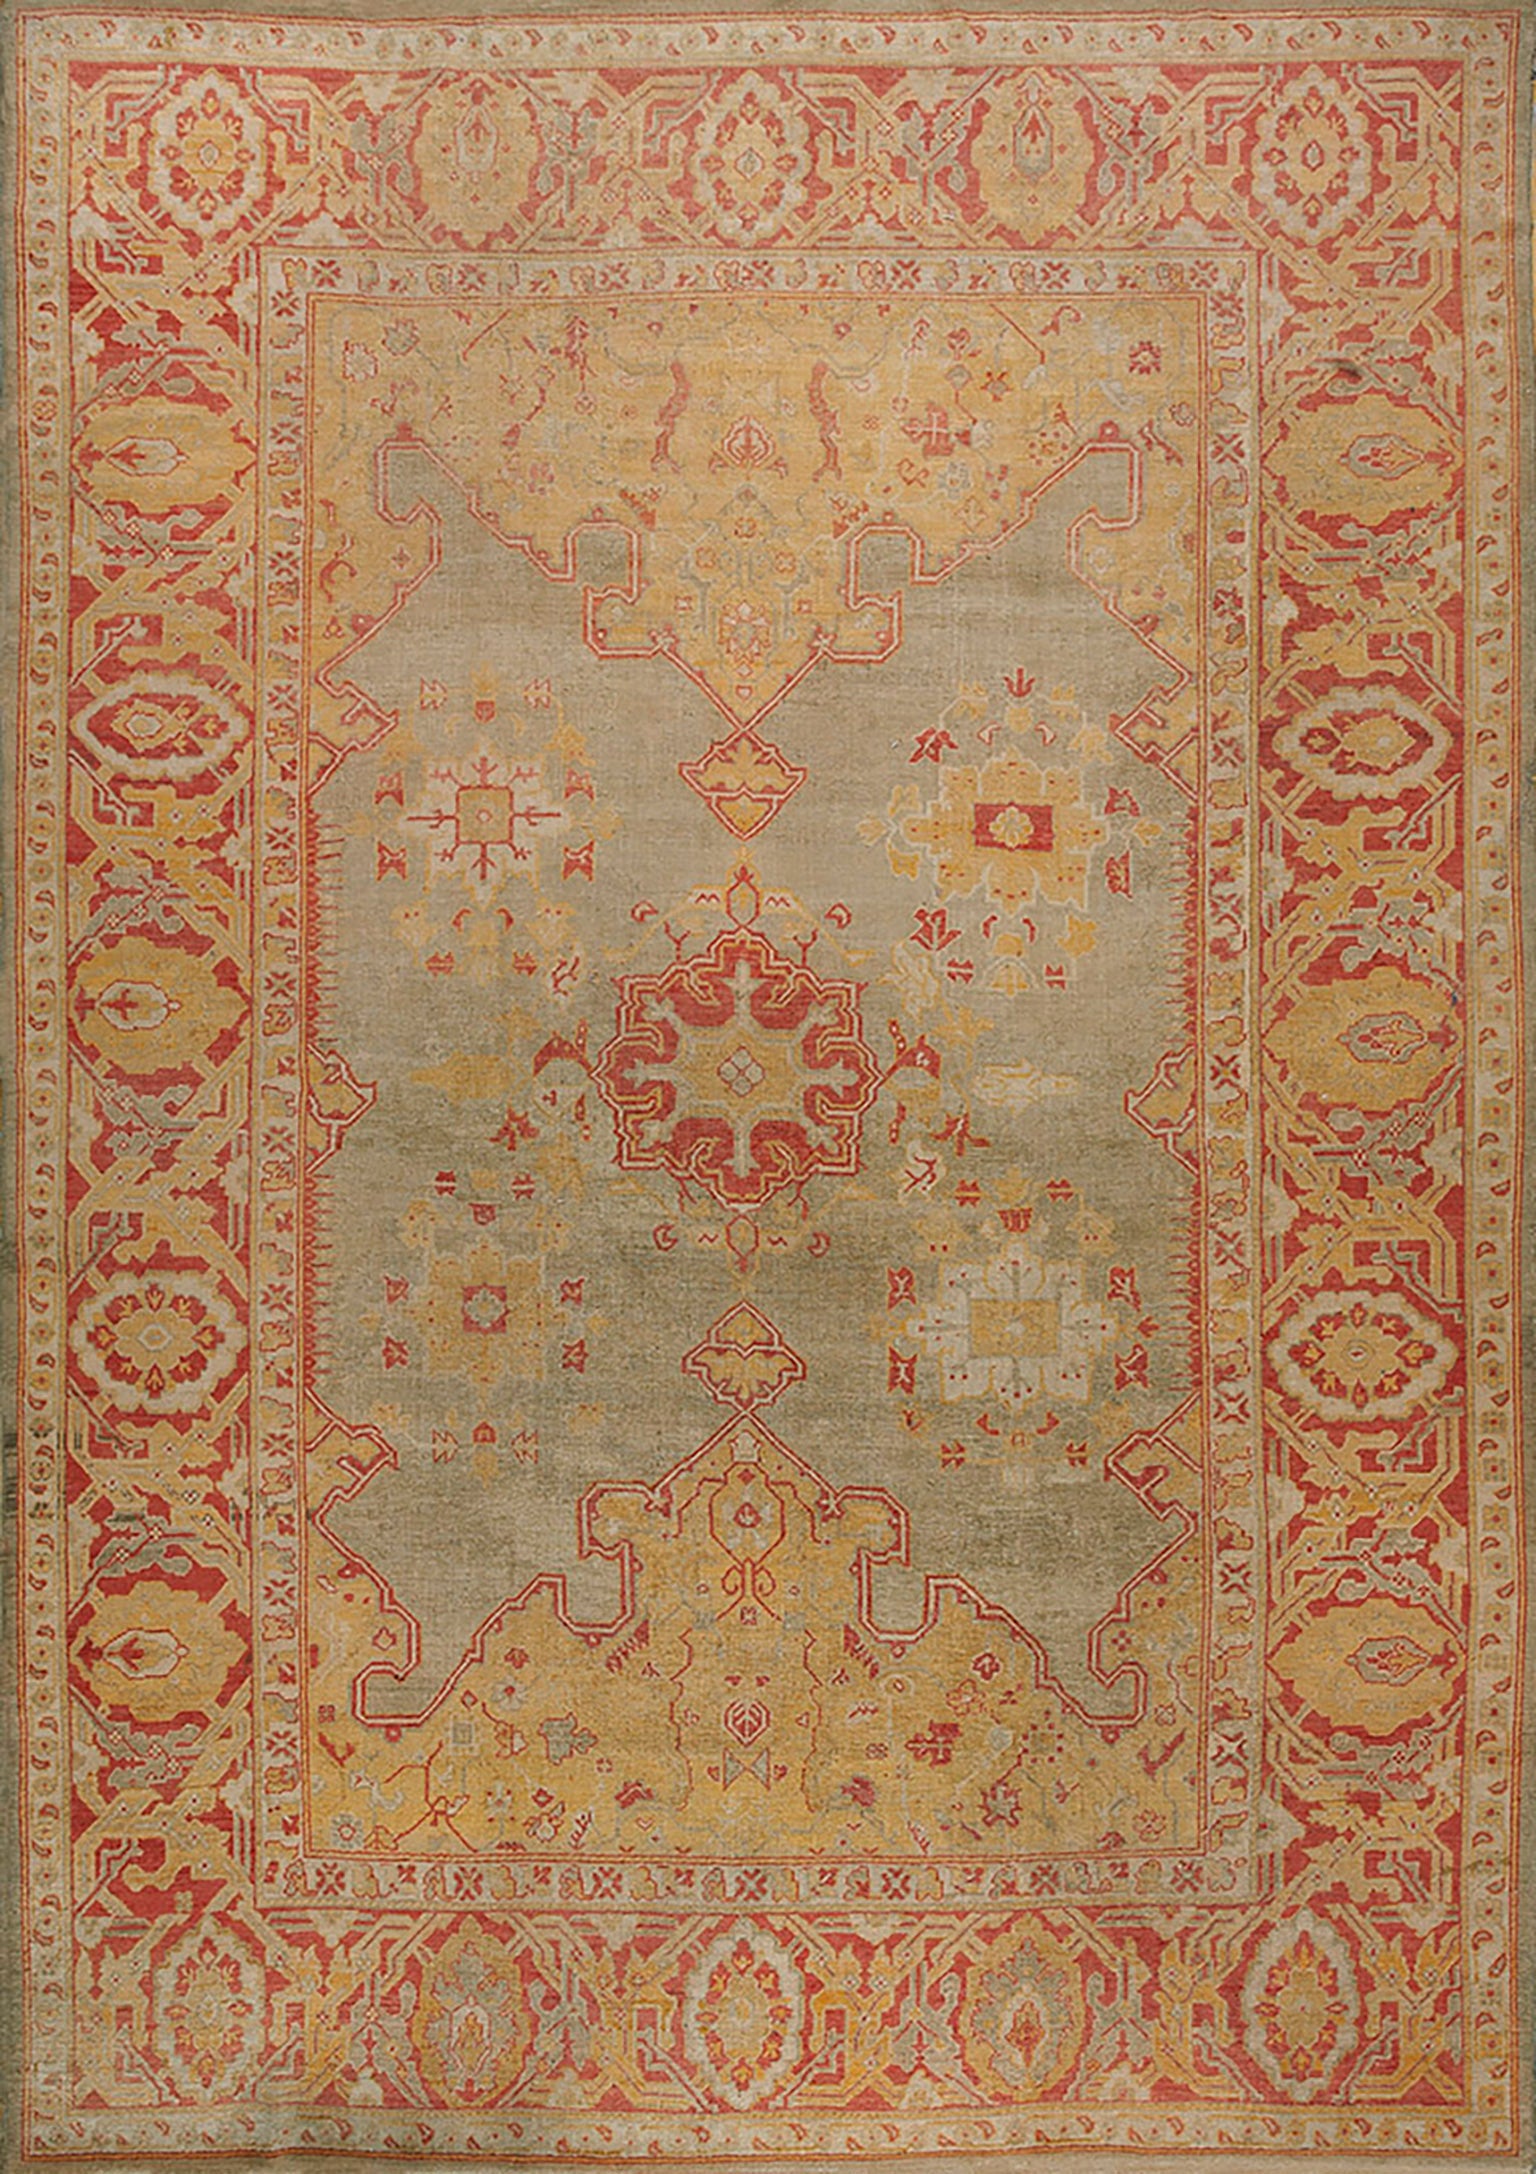 19th Century Turkish Oushak Carpet ( 10' x 13'6" - 305 x 412 ) For Sale